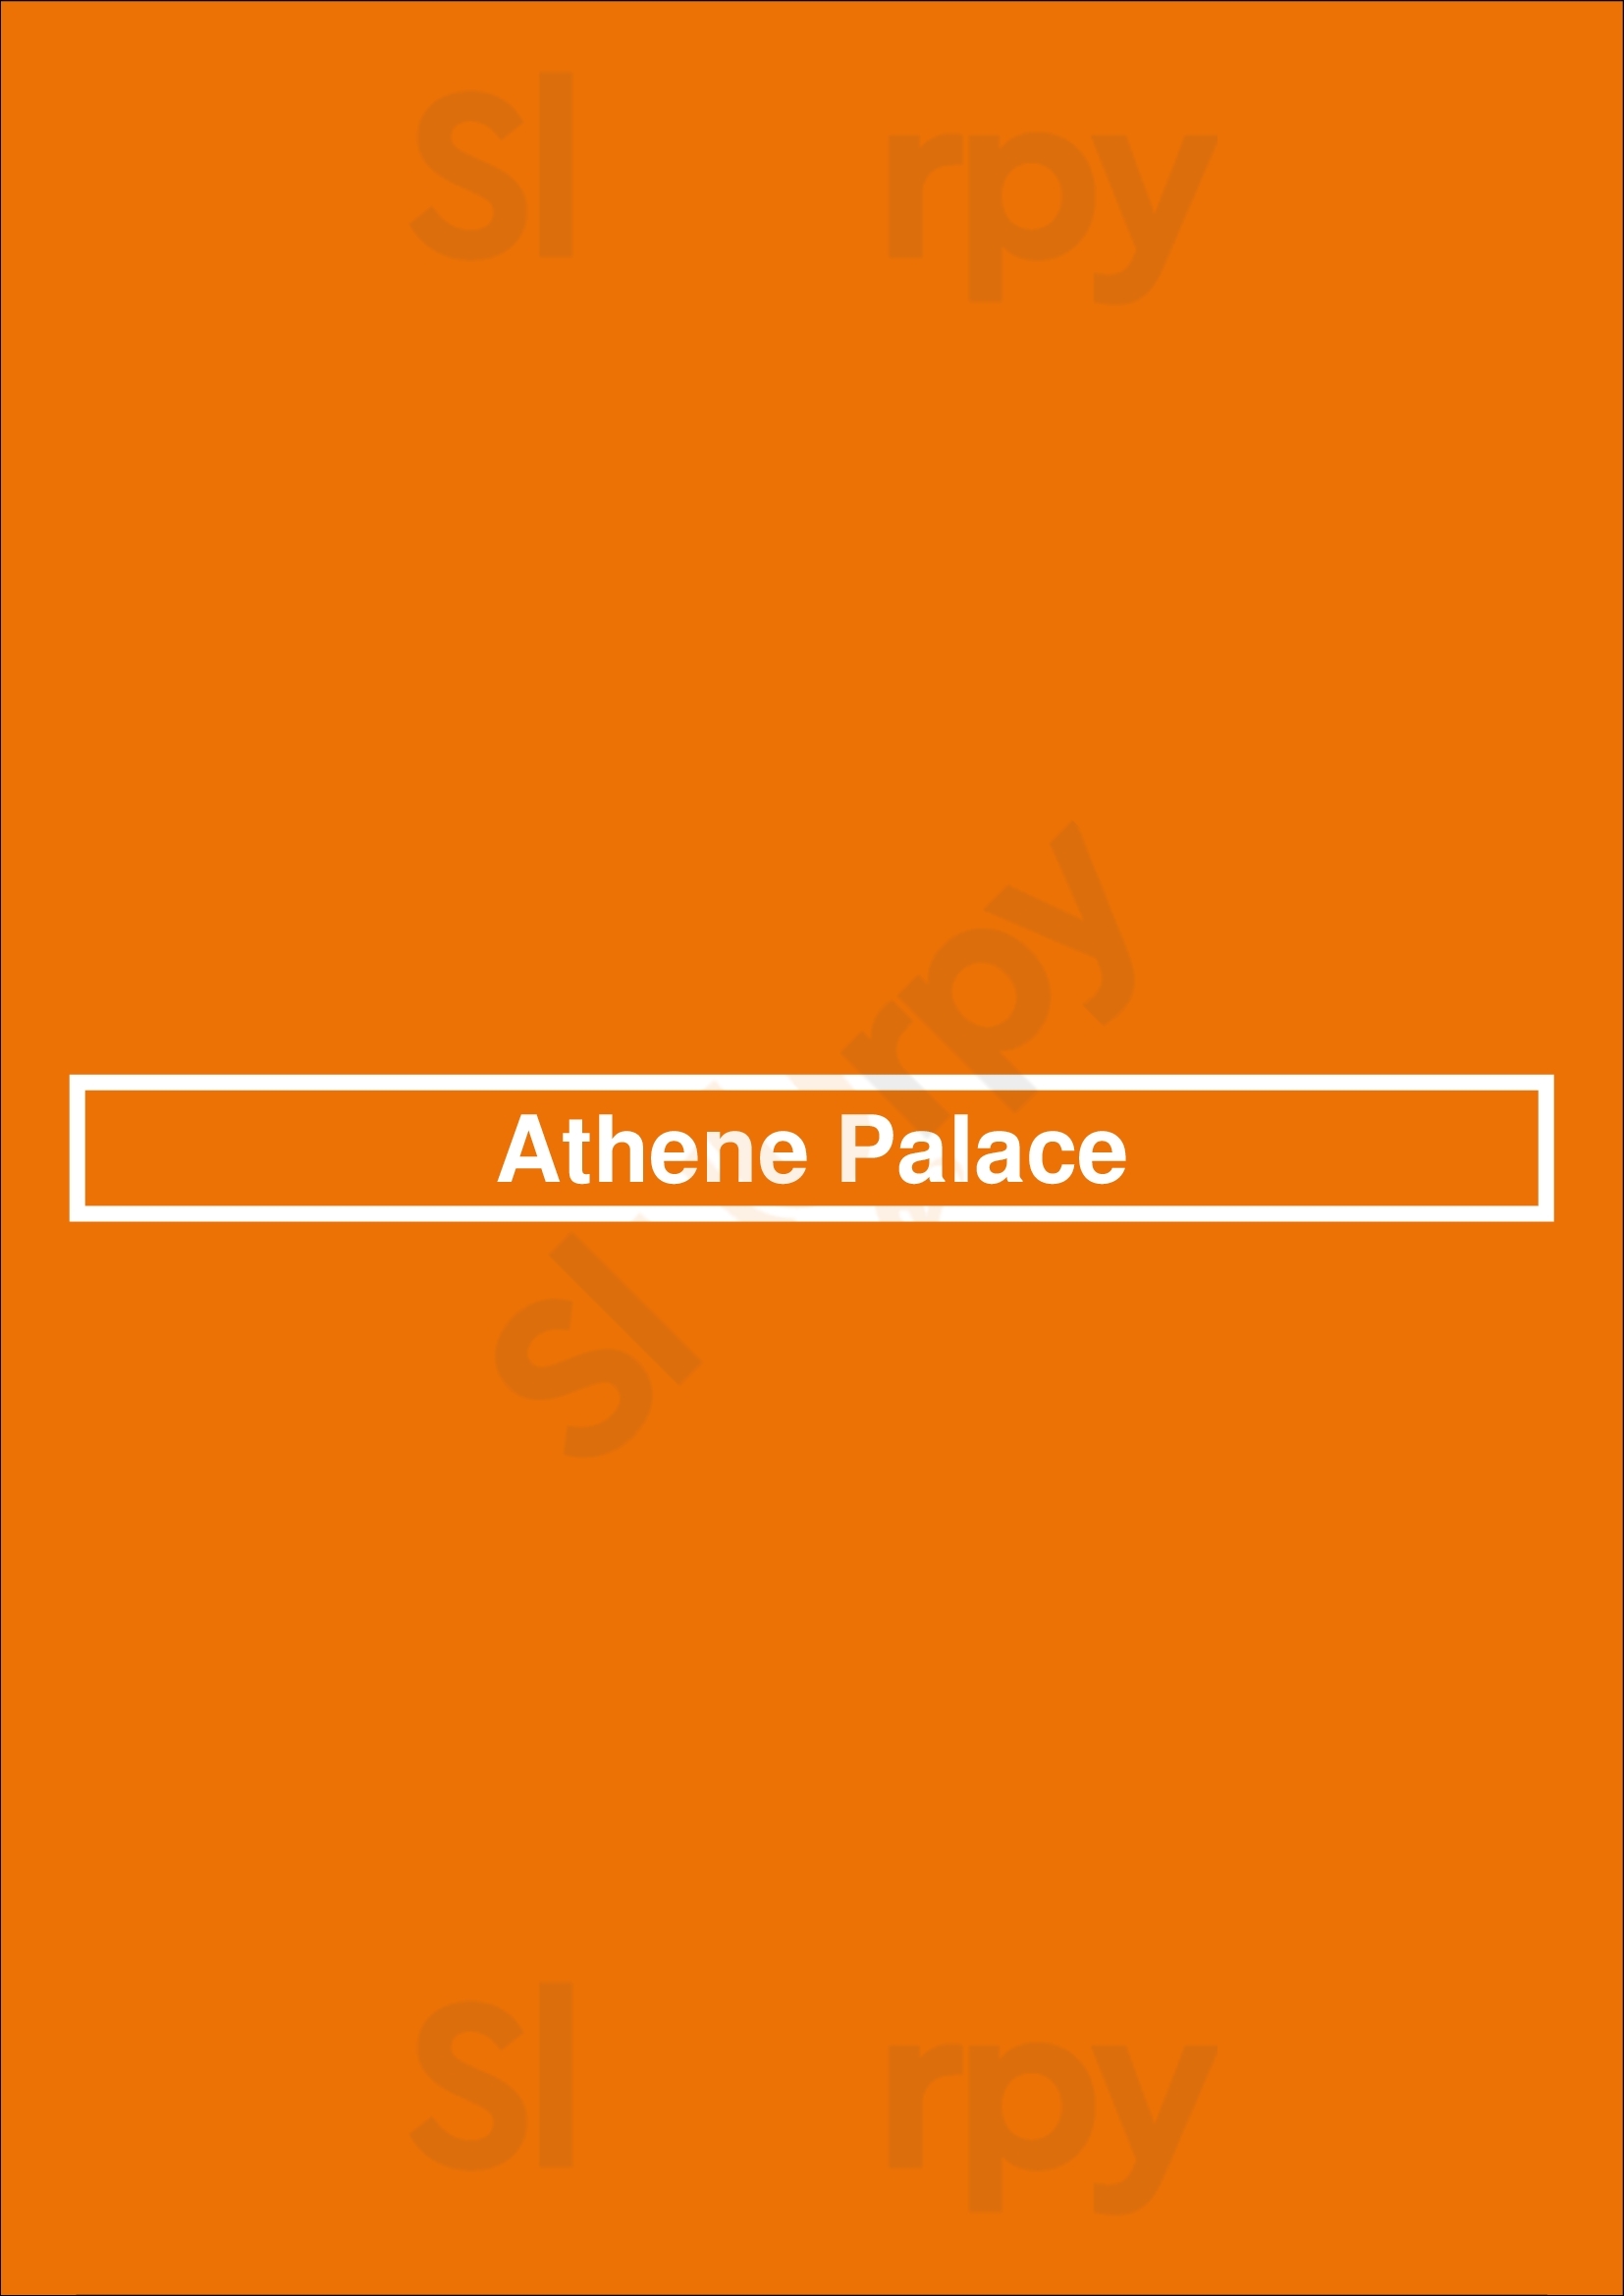 Athene Palace Wateringen Menu - 1